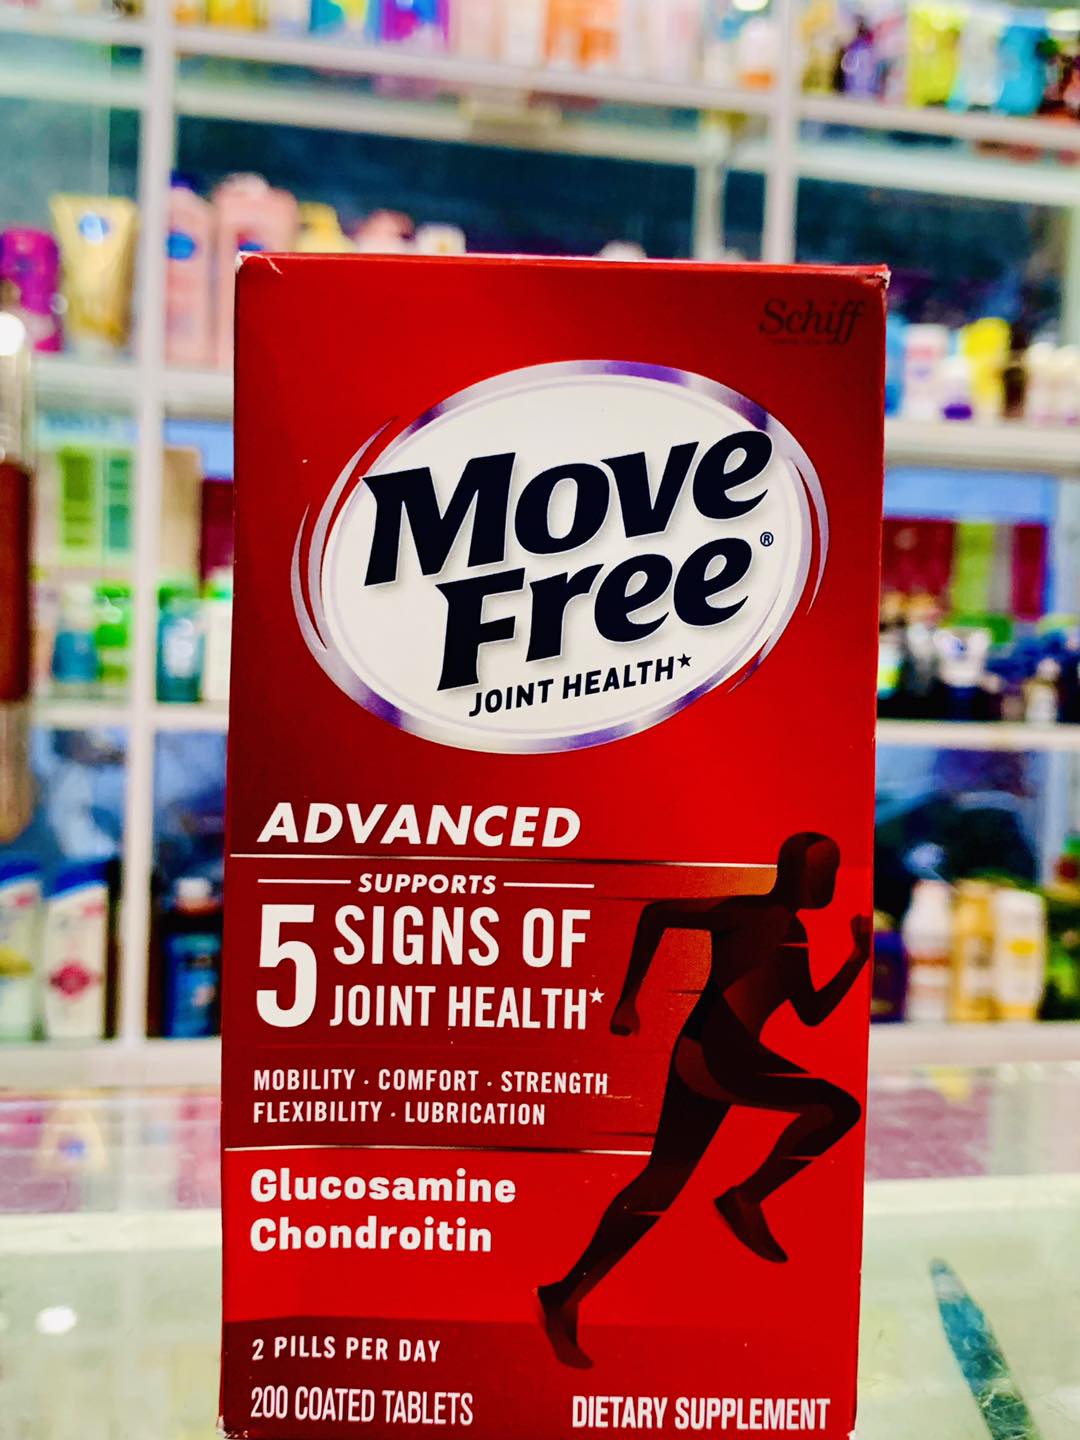 Schiff Move Free Joint Health Advanced